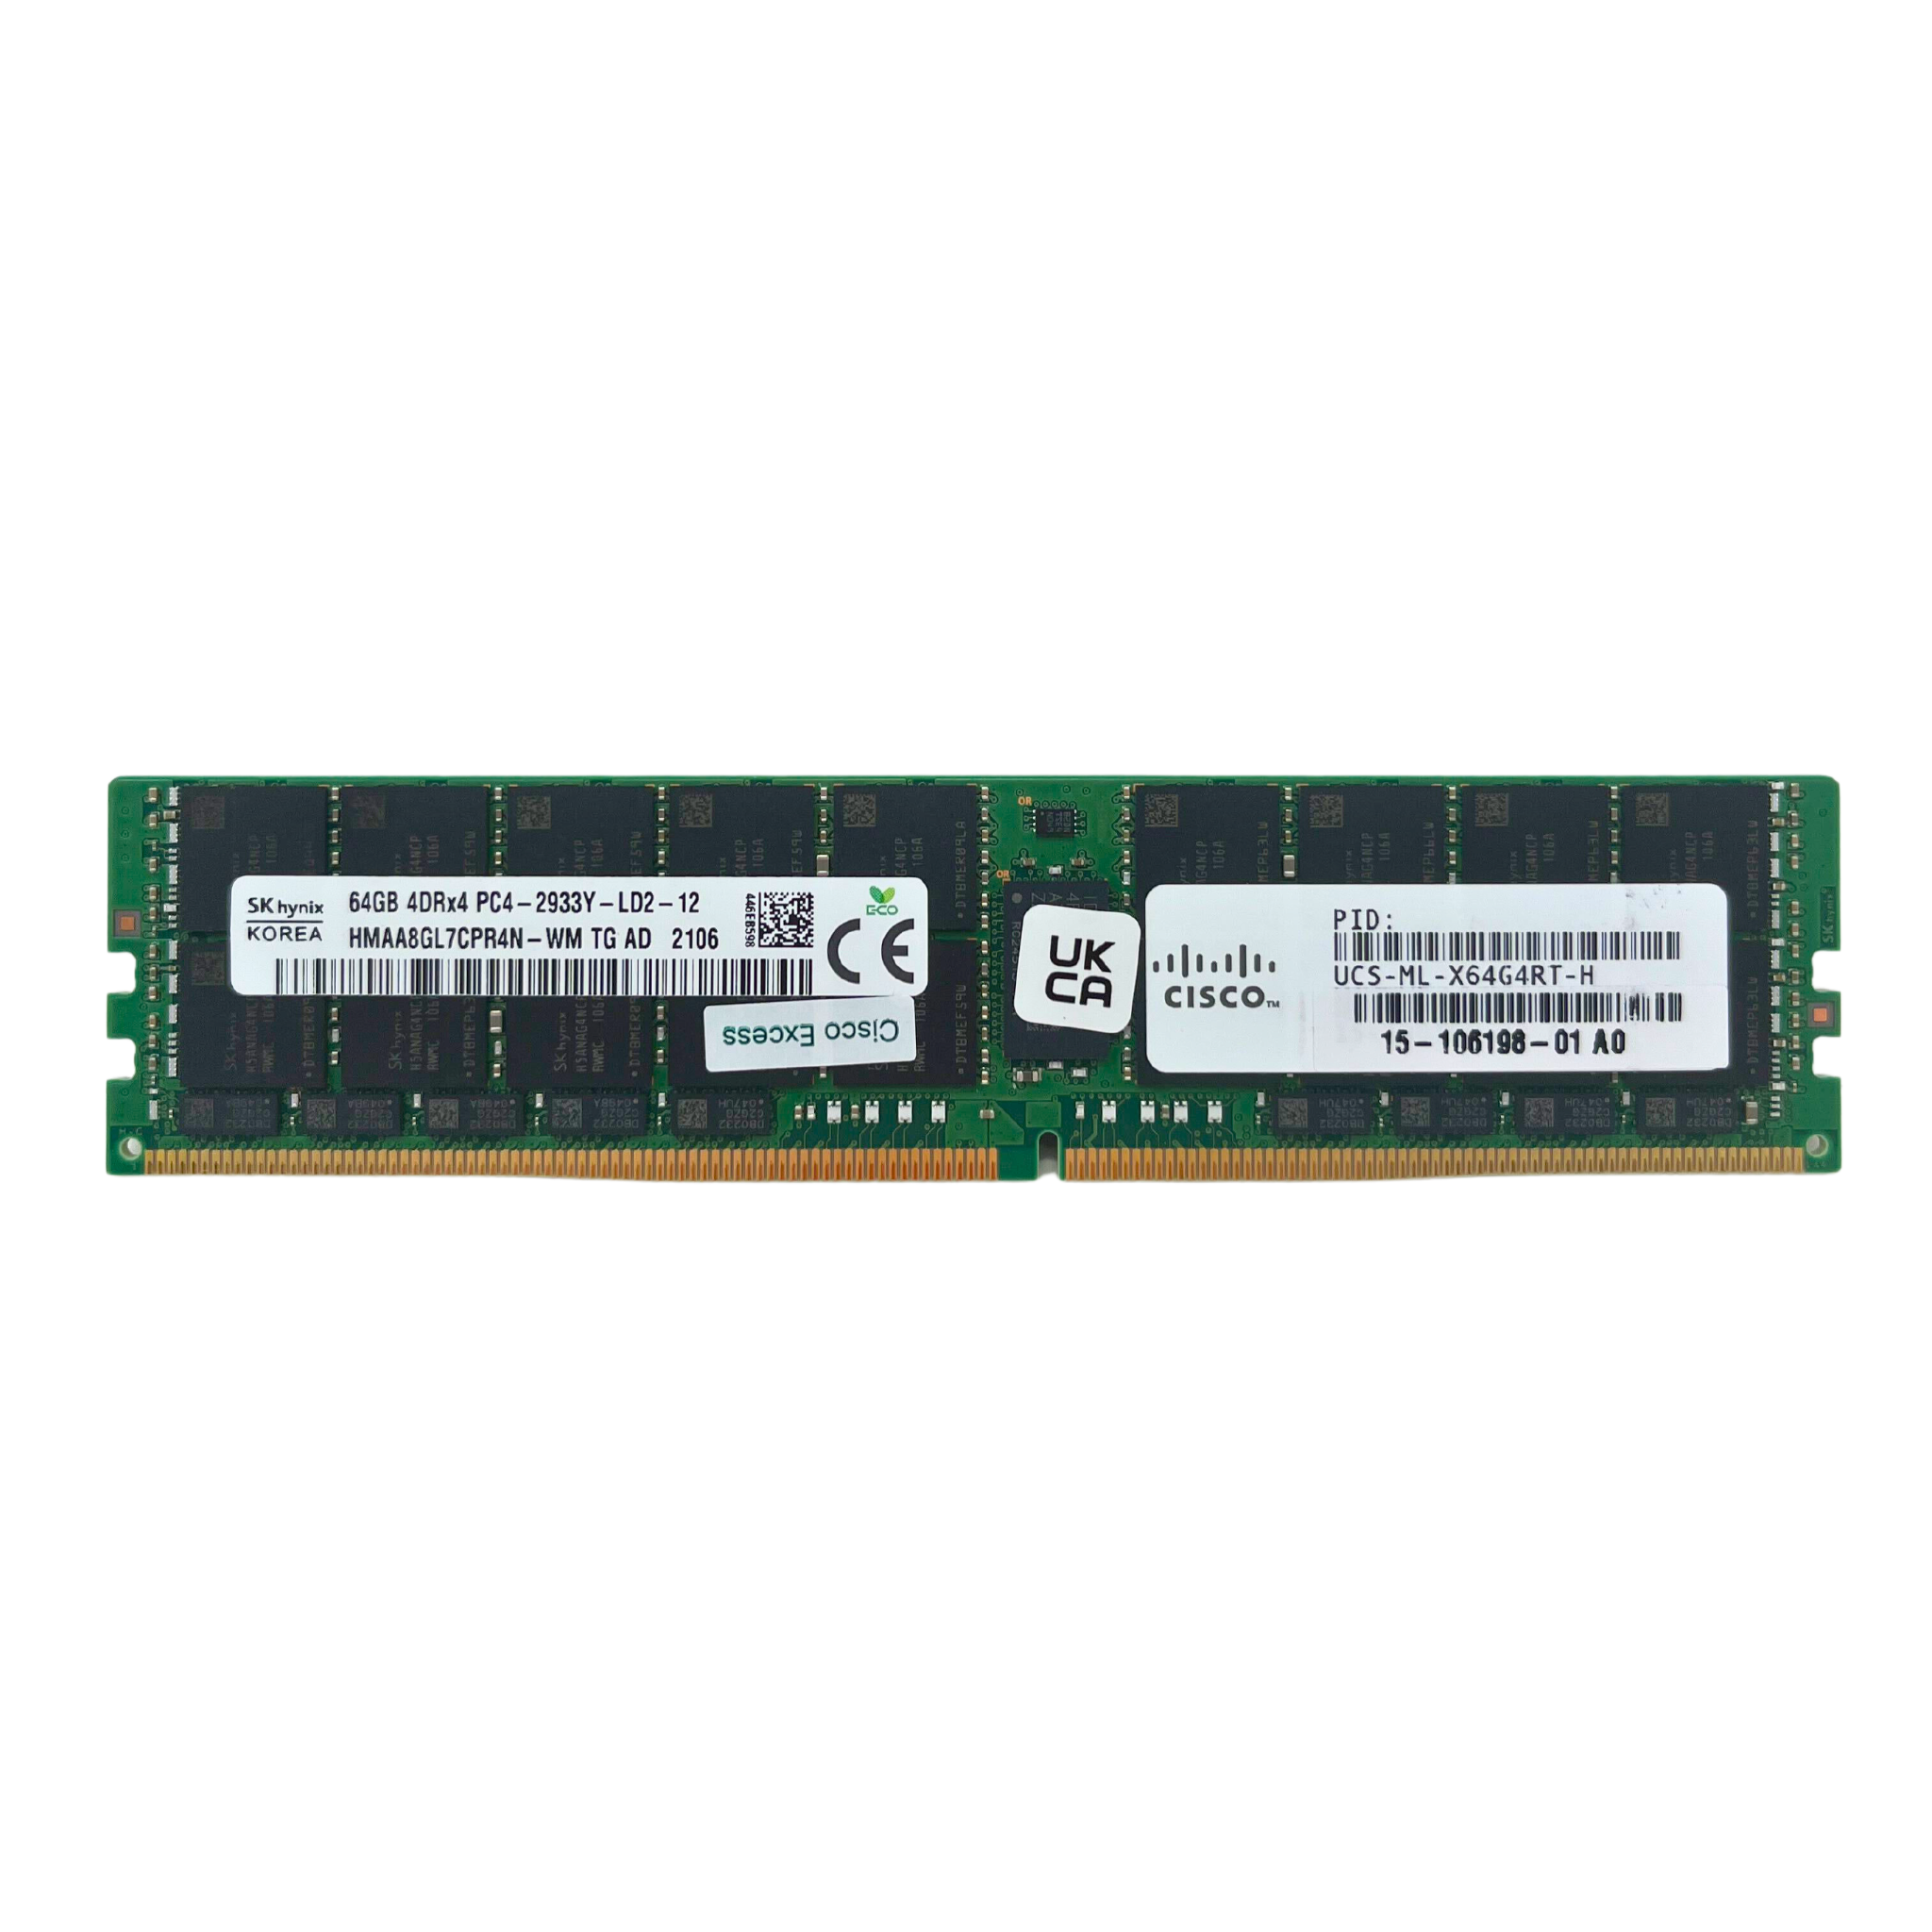 Cisco 64GB 4DRX4 PC4-2933Y  ECC  Registered  LRDIMM Memory  (HMAA8GL7CPR4N-WM T4 AA-CISCO)